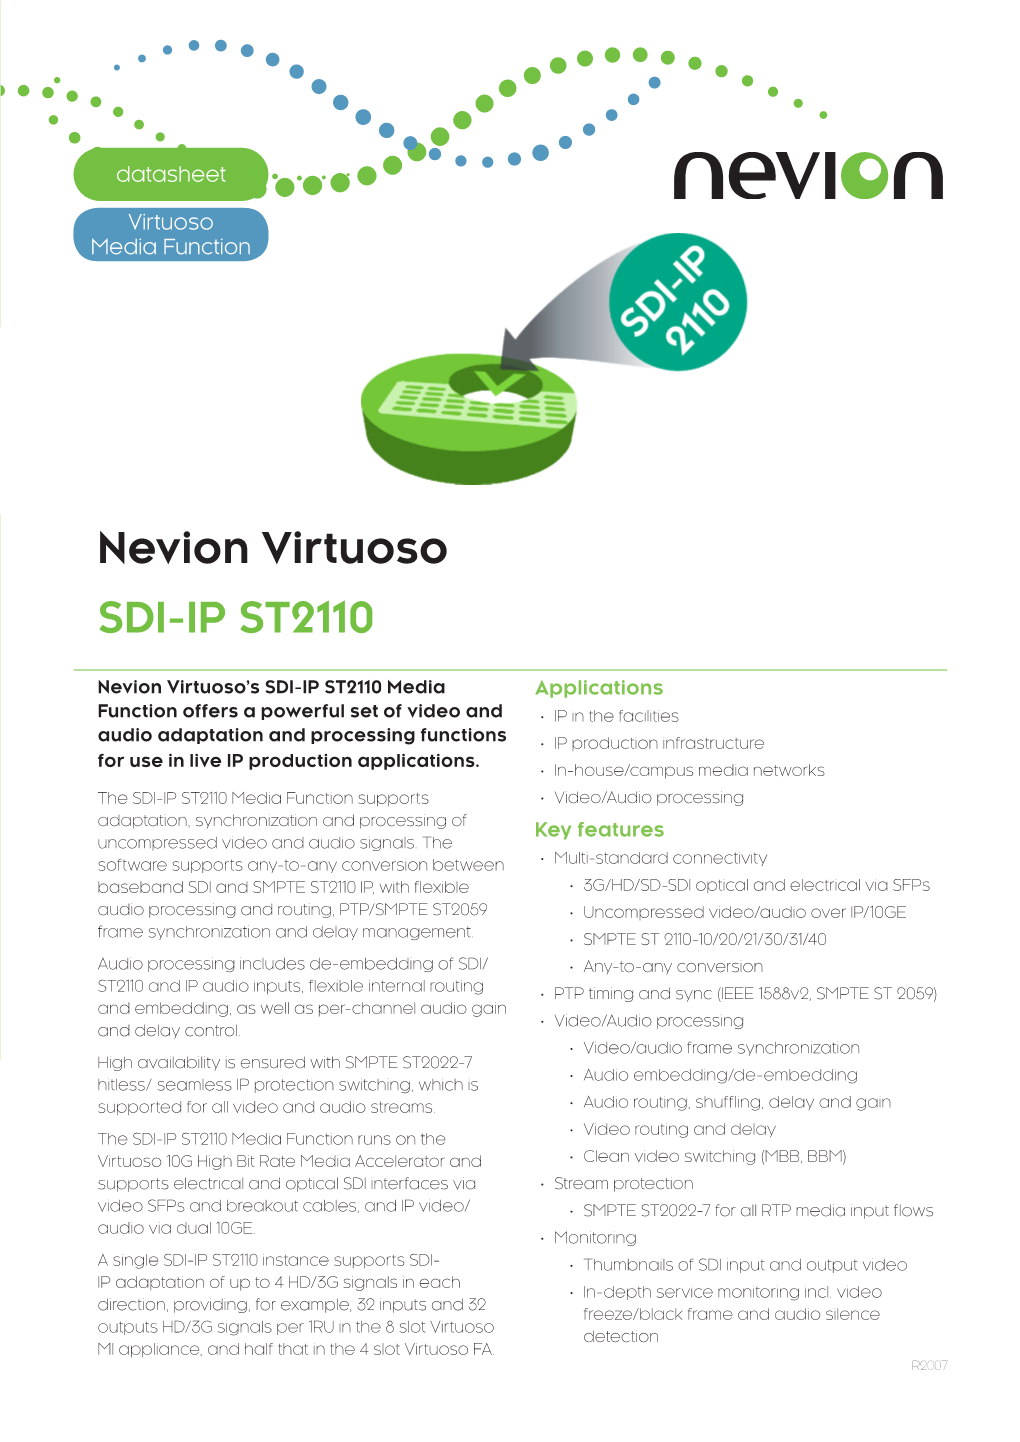 Nevion Virtuoso SDI-IP ST2110